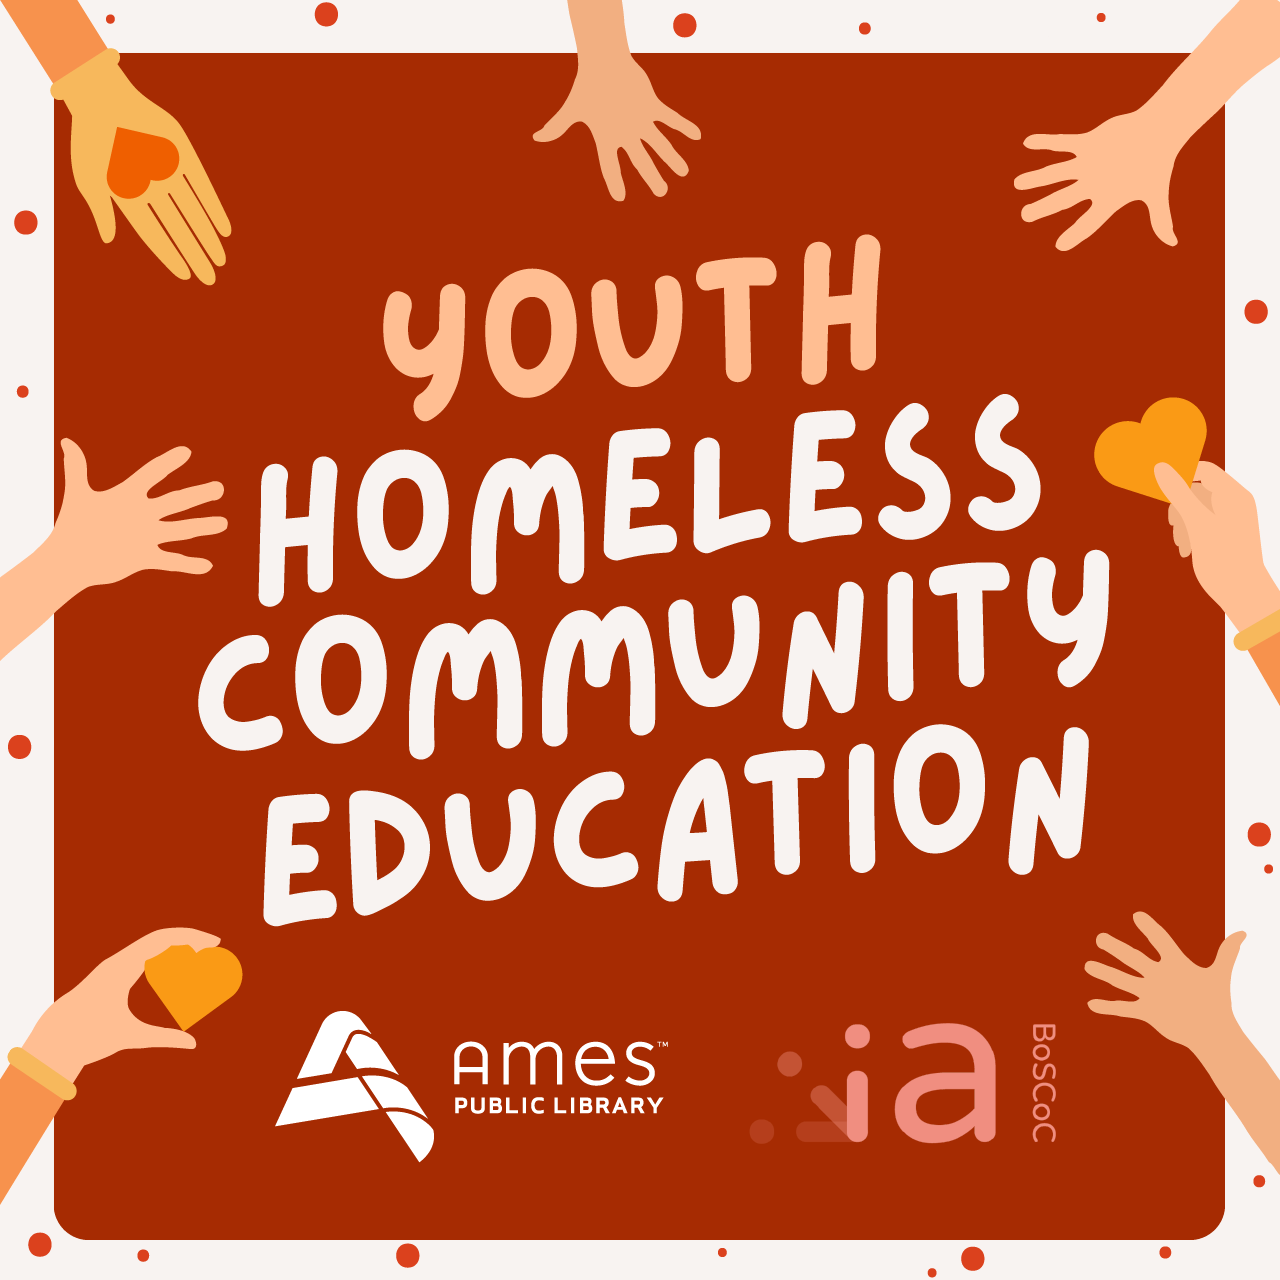 Youth Homeless Community Education